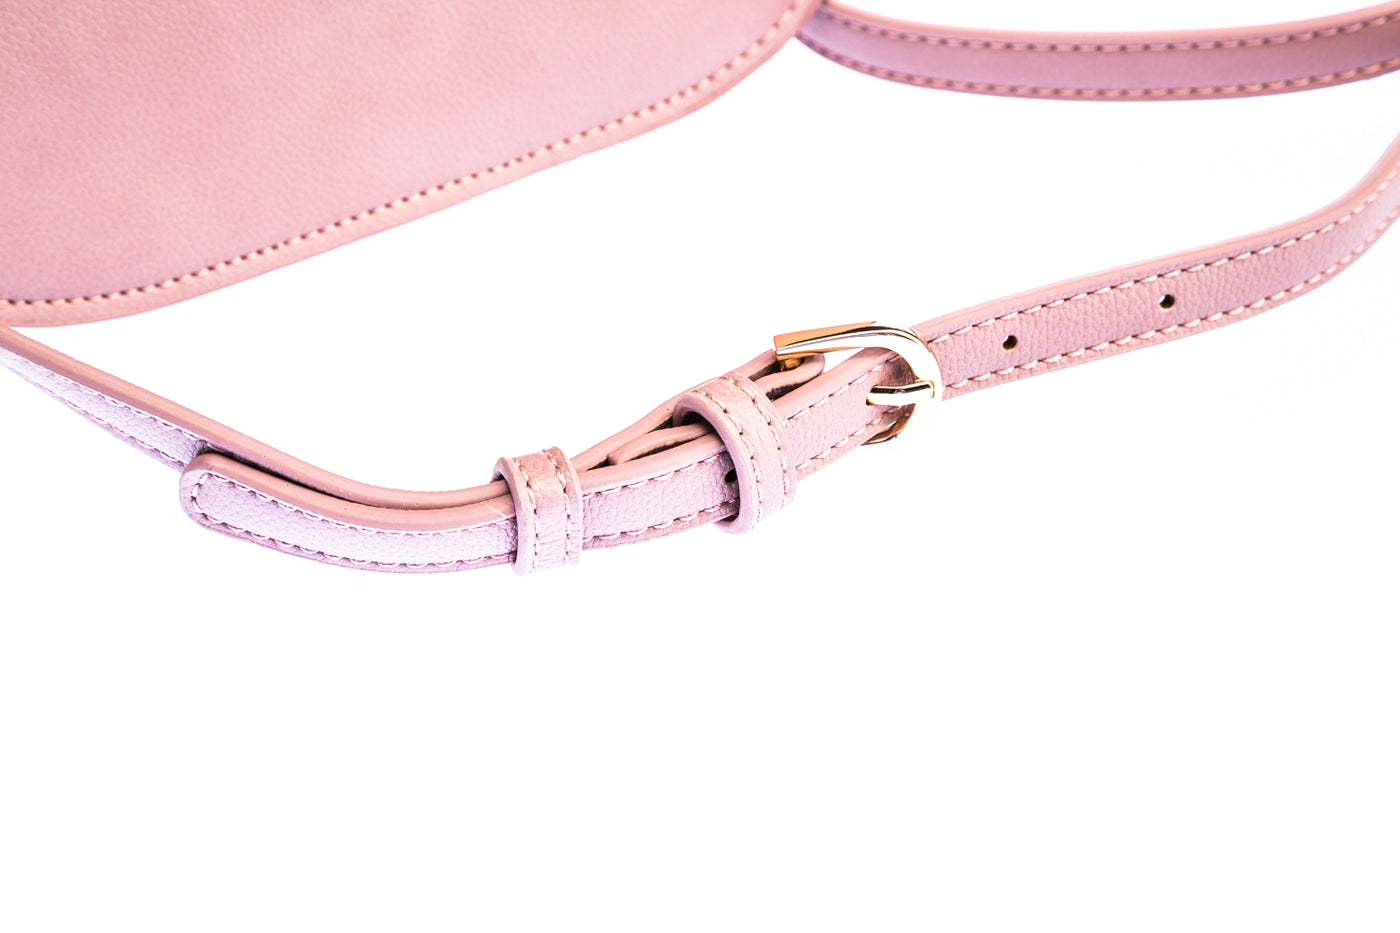 Valentino by Mario Valentino Unicorno Shoulder Ladies Handbag in Rose